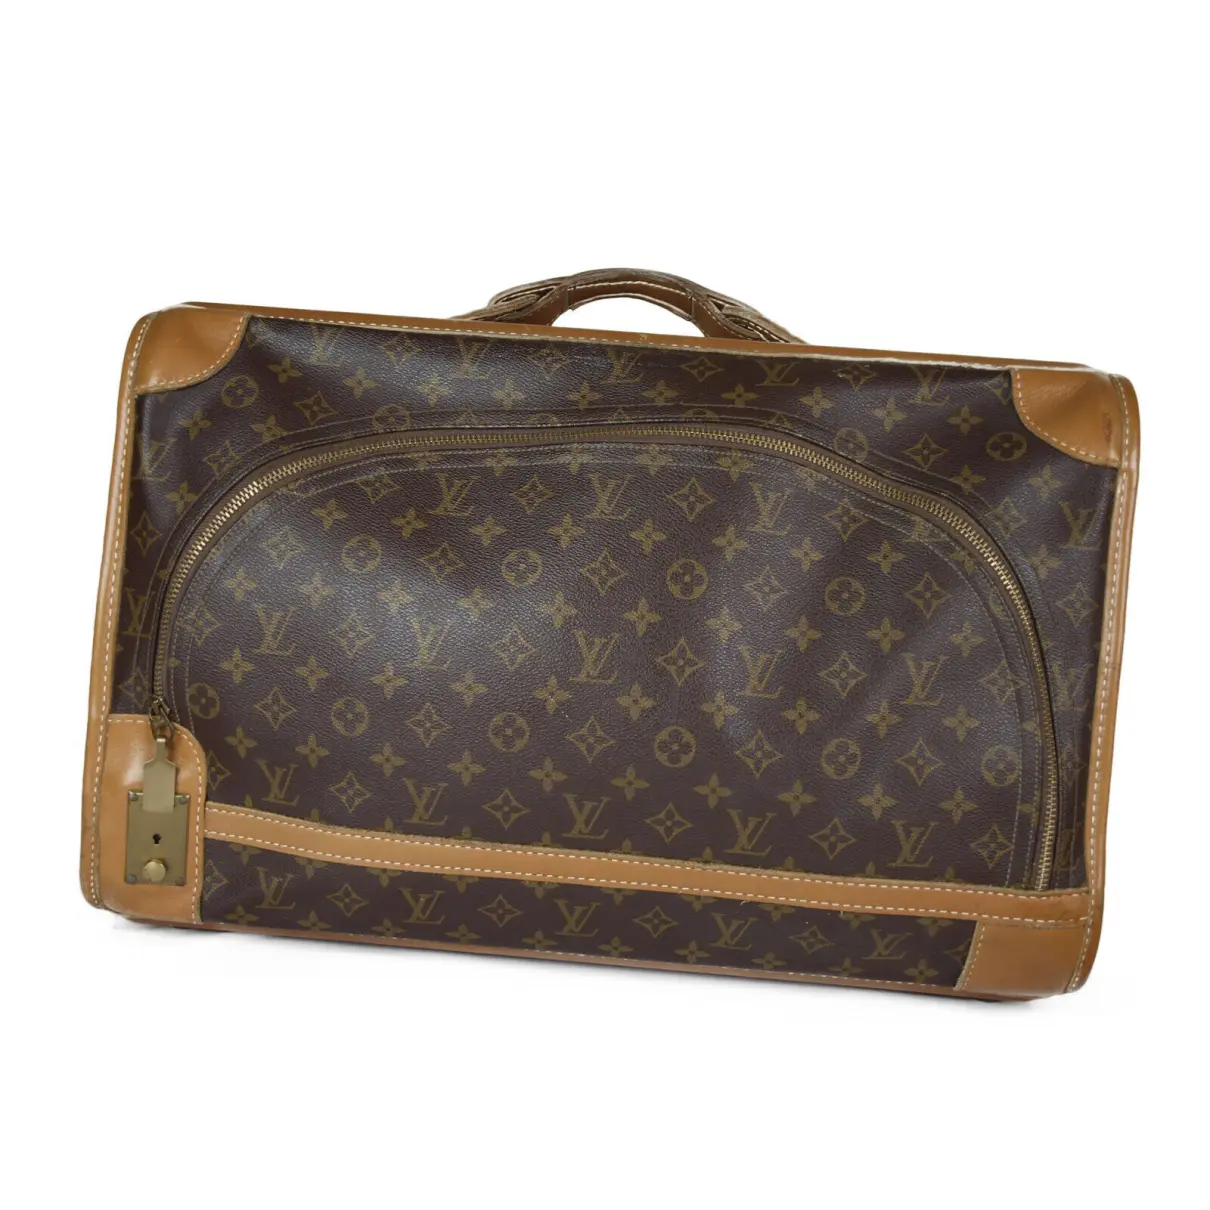 Pullman leather travel bag Louis Vuitton